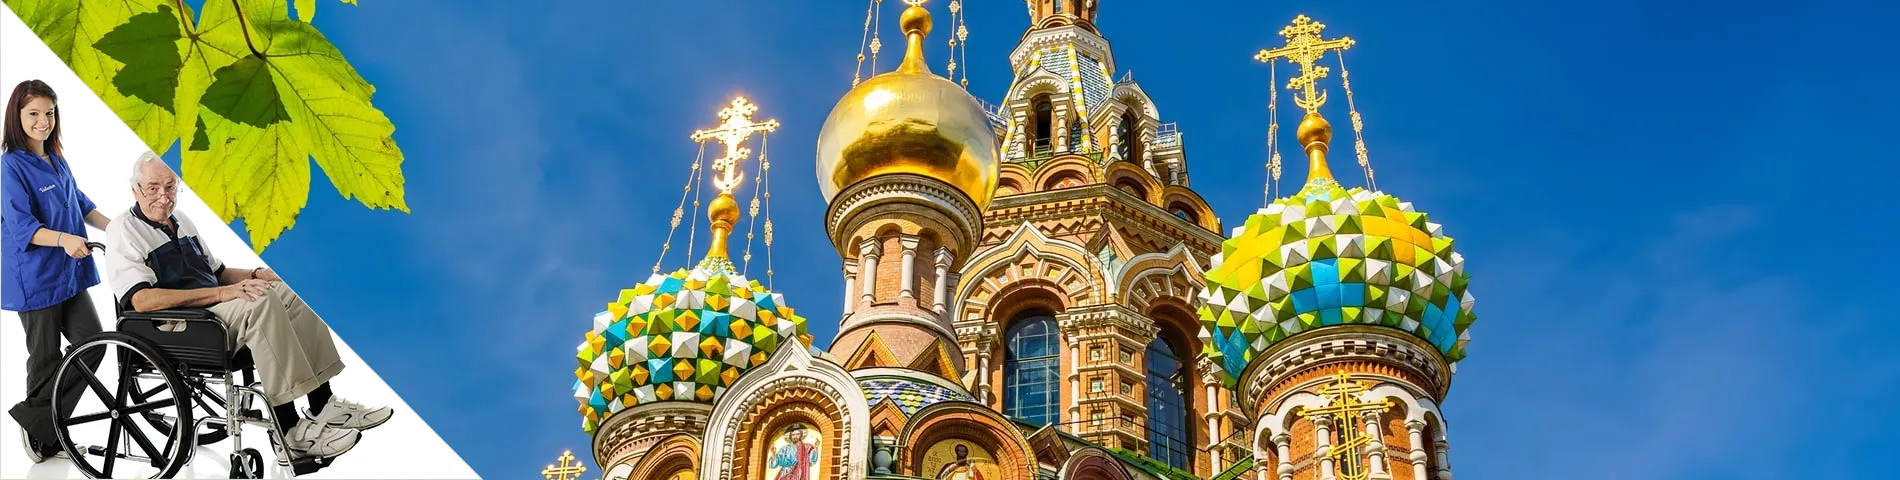 St. Petersburg - Russisk & Frivillighetsarbeid